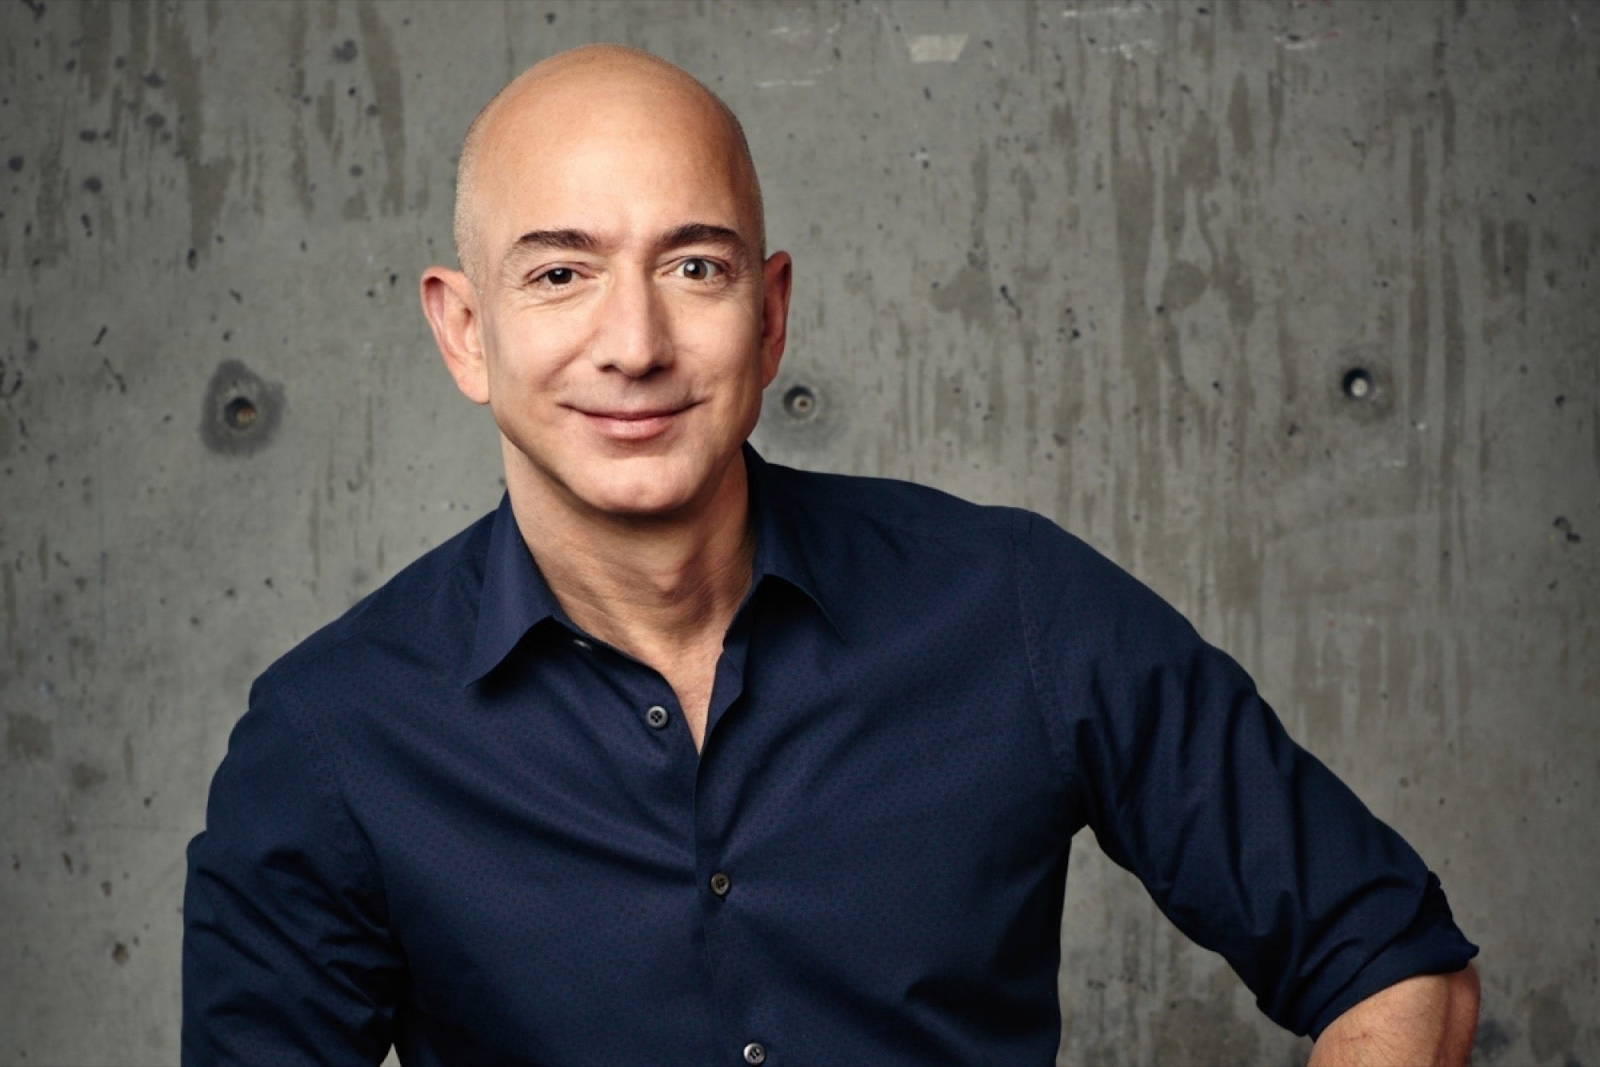 Jeff Bezos, wearing a dark shirt, sits against a concrete background.